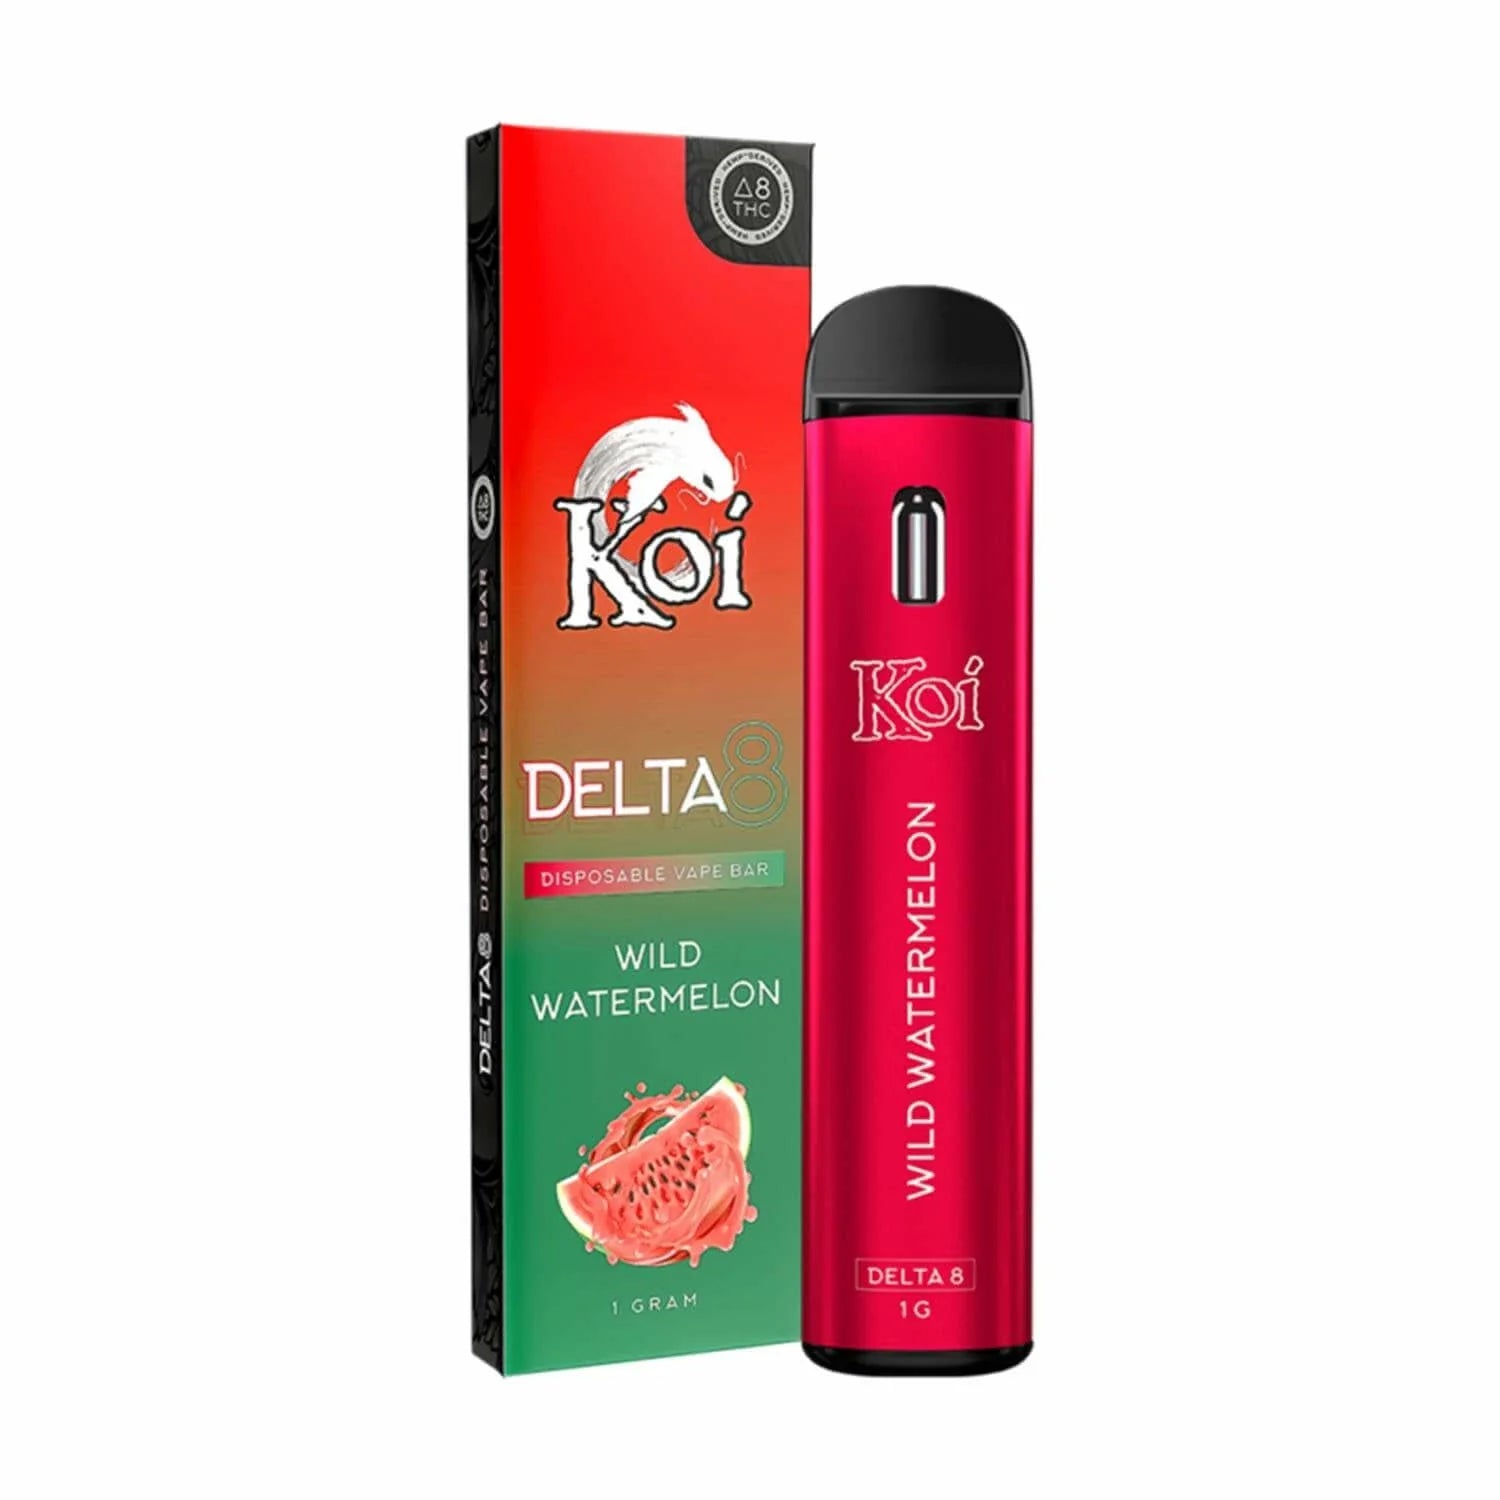 Koi Wild Watermelon Delta 8 Disposable Vape Bar (1g) Best Price